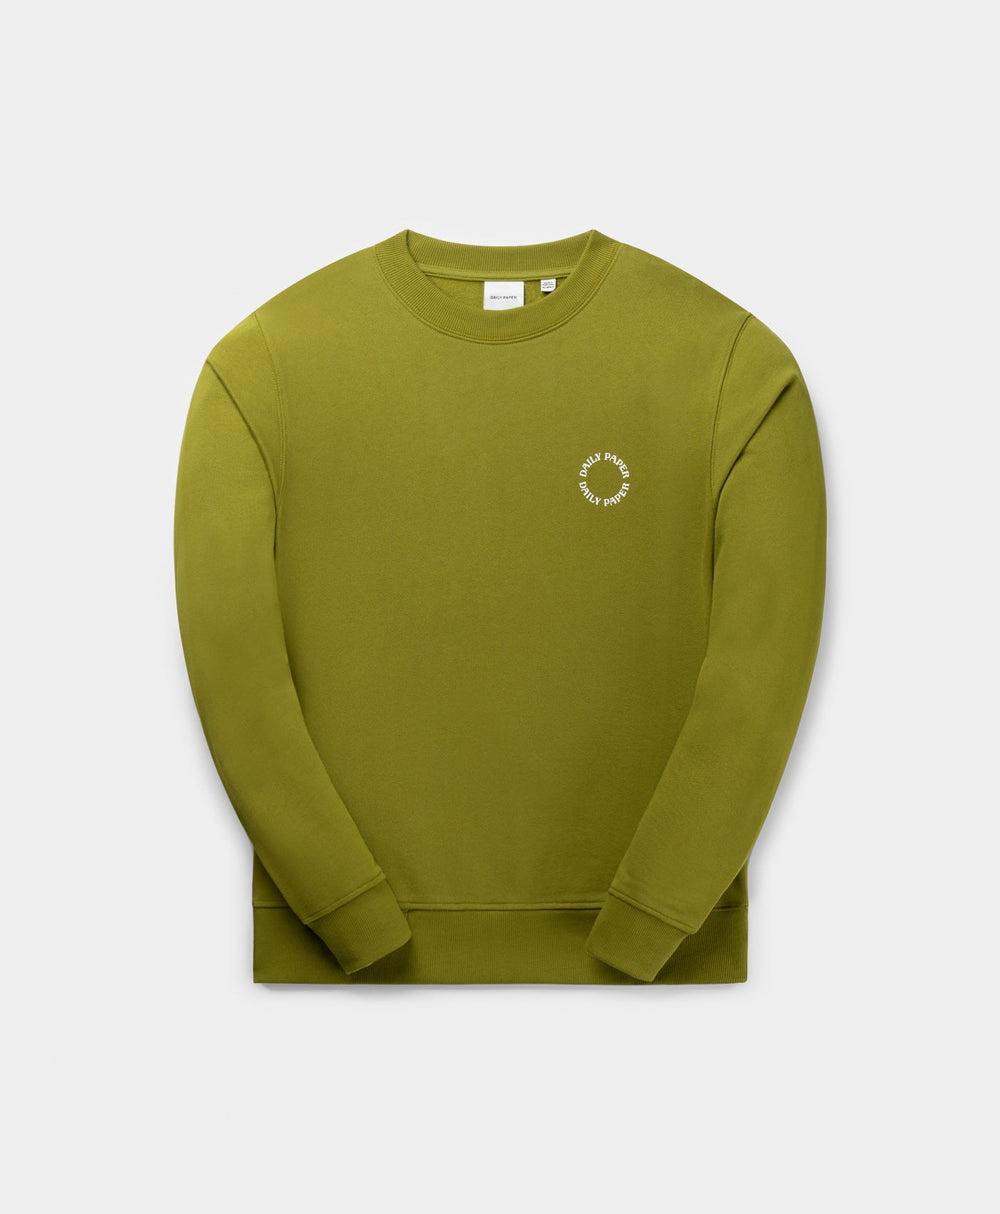 DP - Cardamom Green Orbit Sweater - Packshot - front 